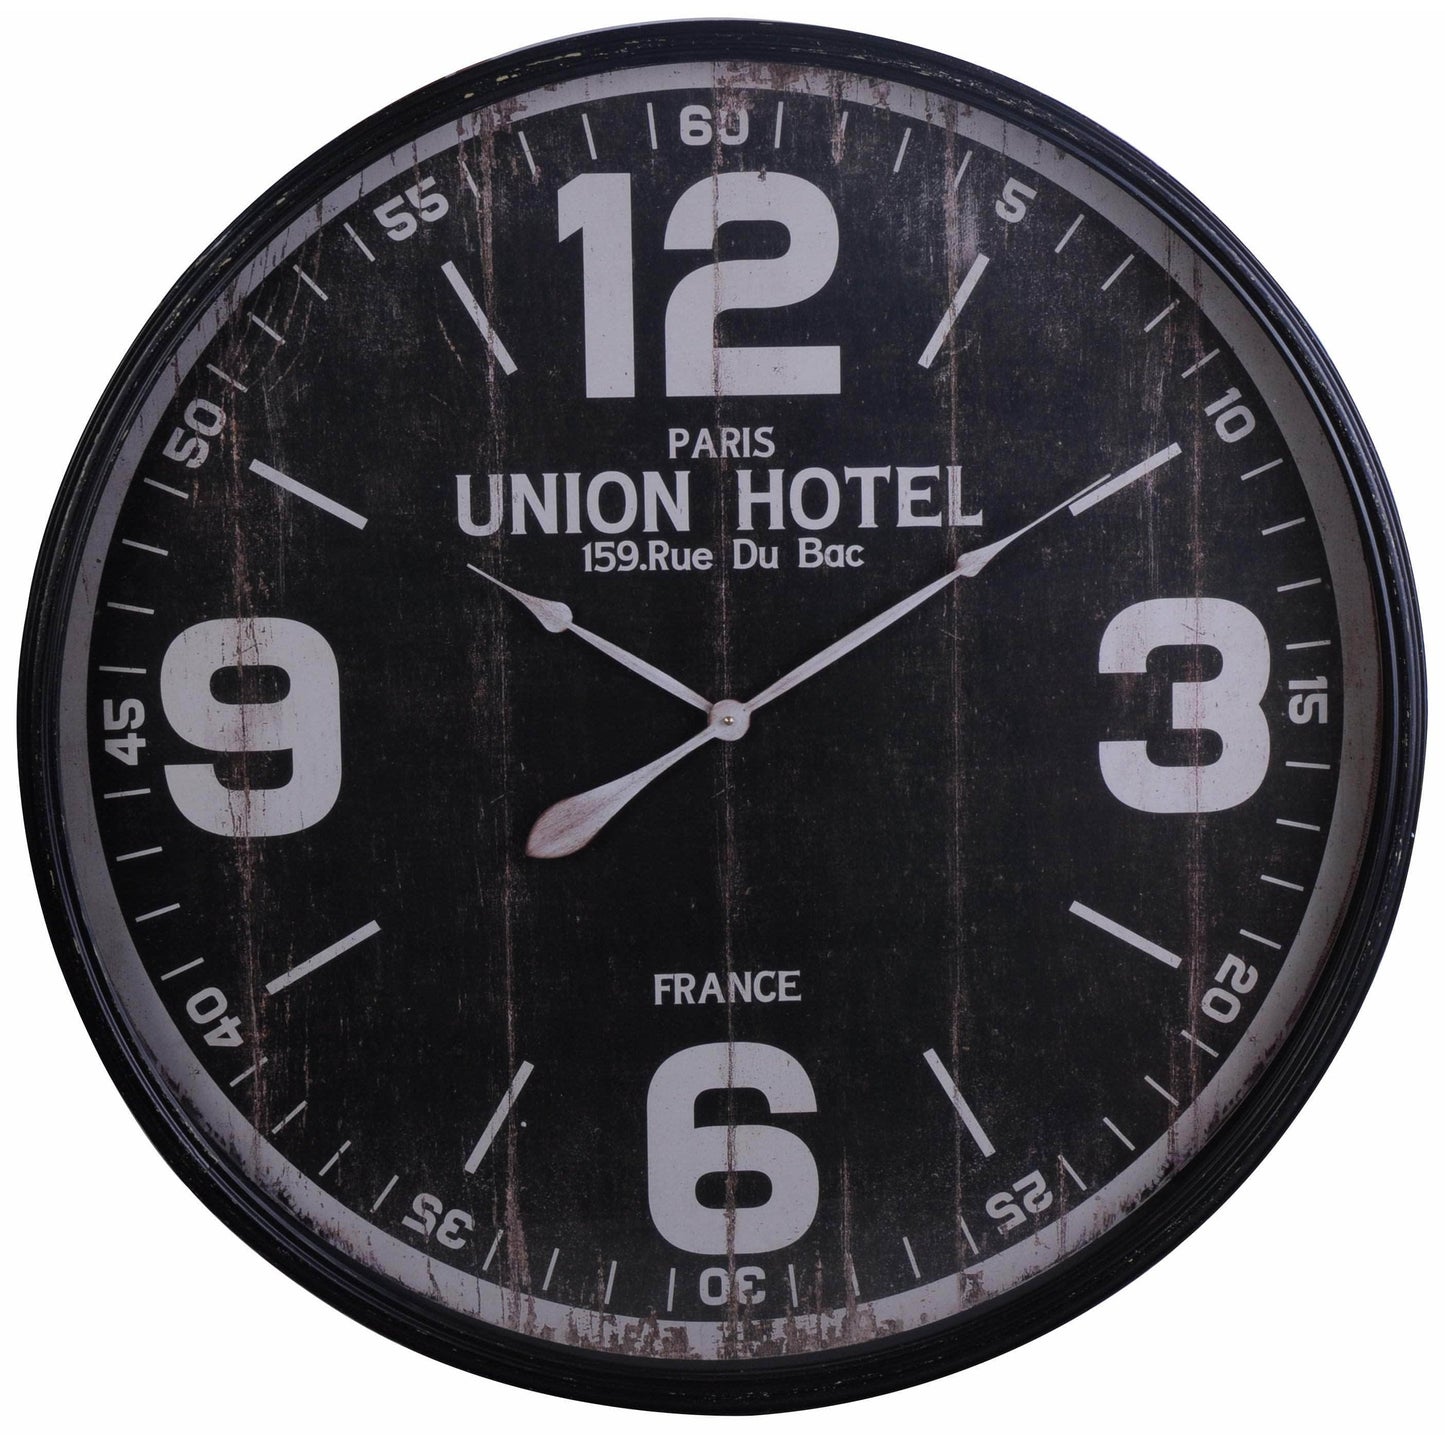 Union Hotel Wall Clock Price in Pakistan